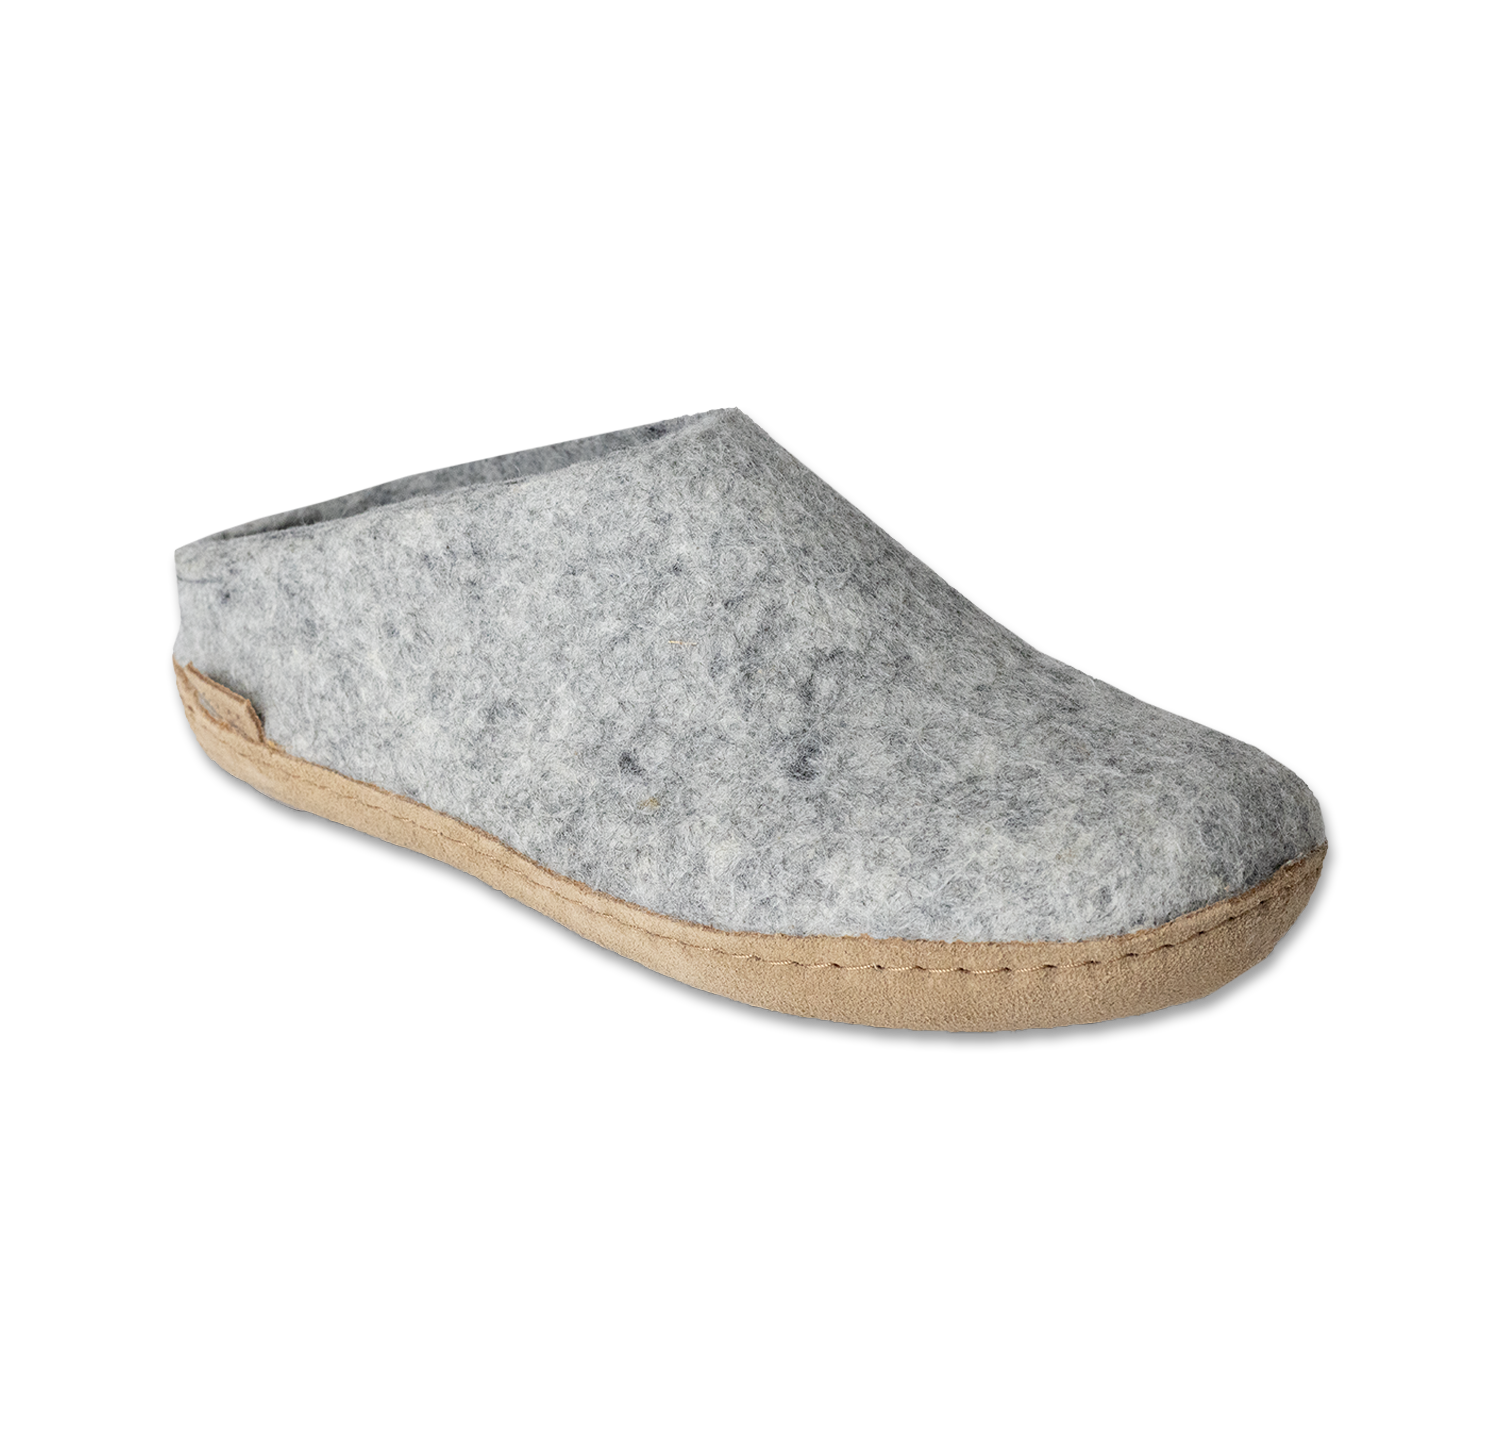 Glerups Slip-on Grey - Leather Sole